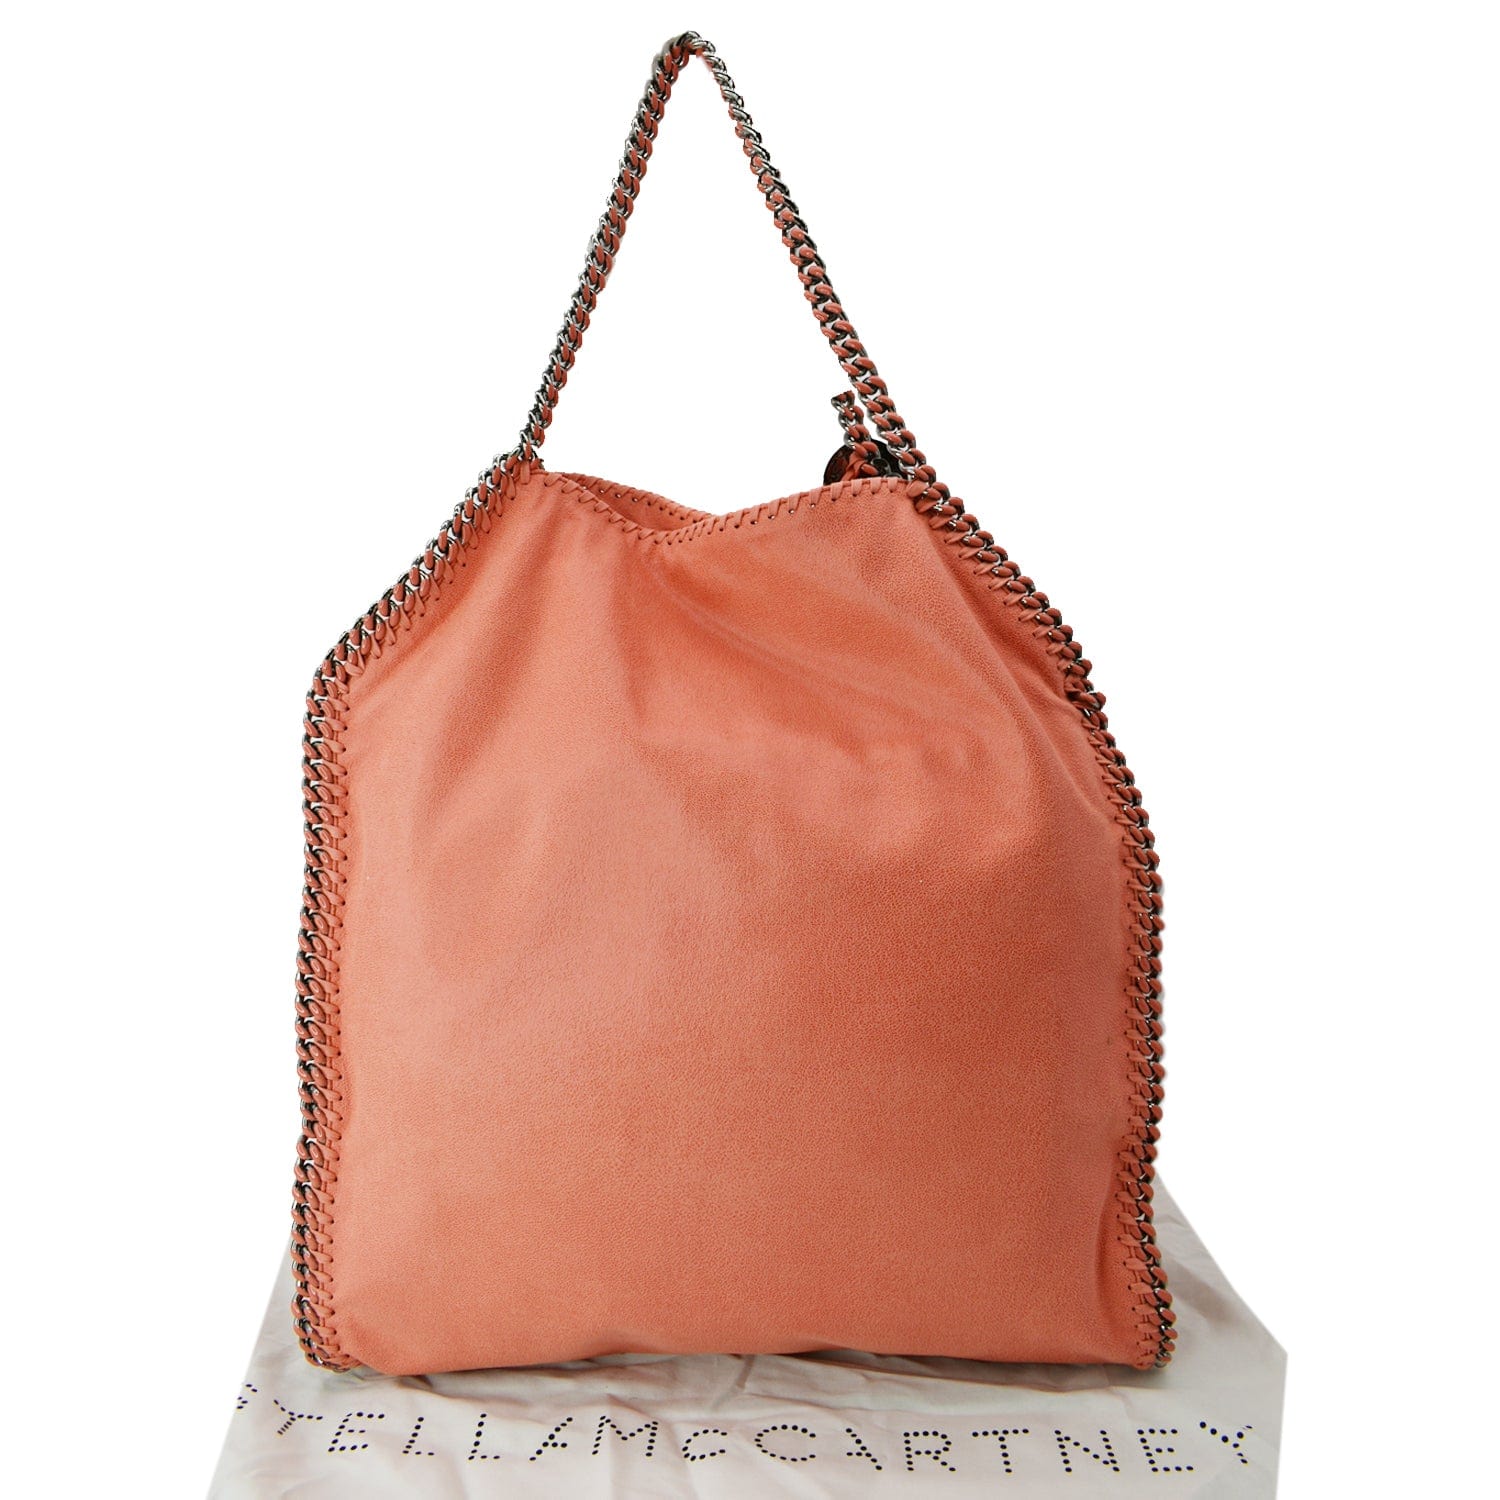 Stella McCartney Falabella Allover Eco Crystal Clutch Bag | Neiman Marcus